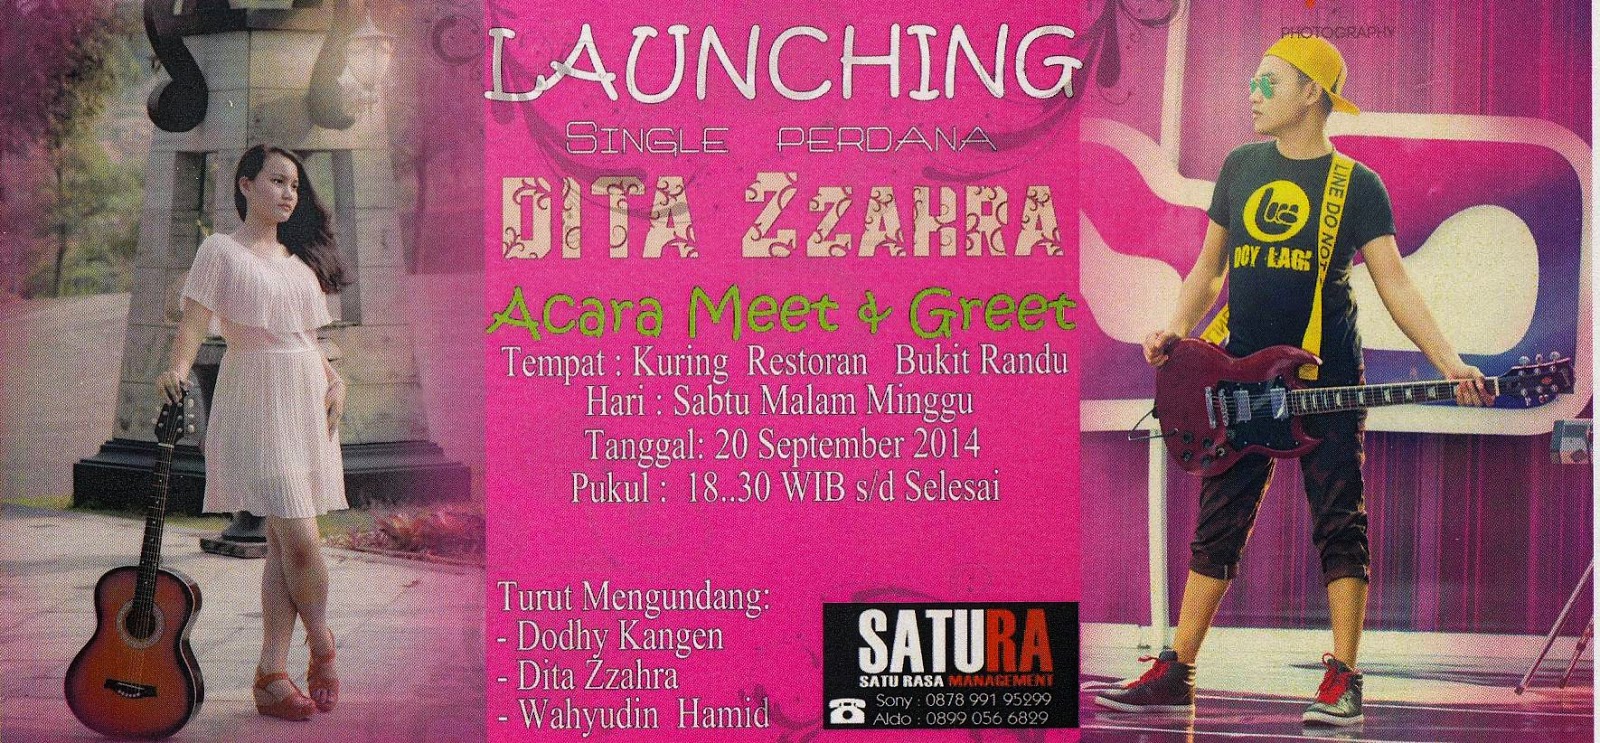 Penyanyi Cilik Lampung Dita Zzahra Launcing Single Perdana Ladi